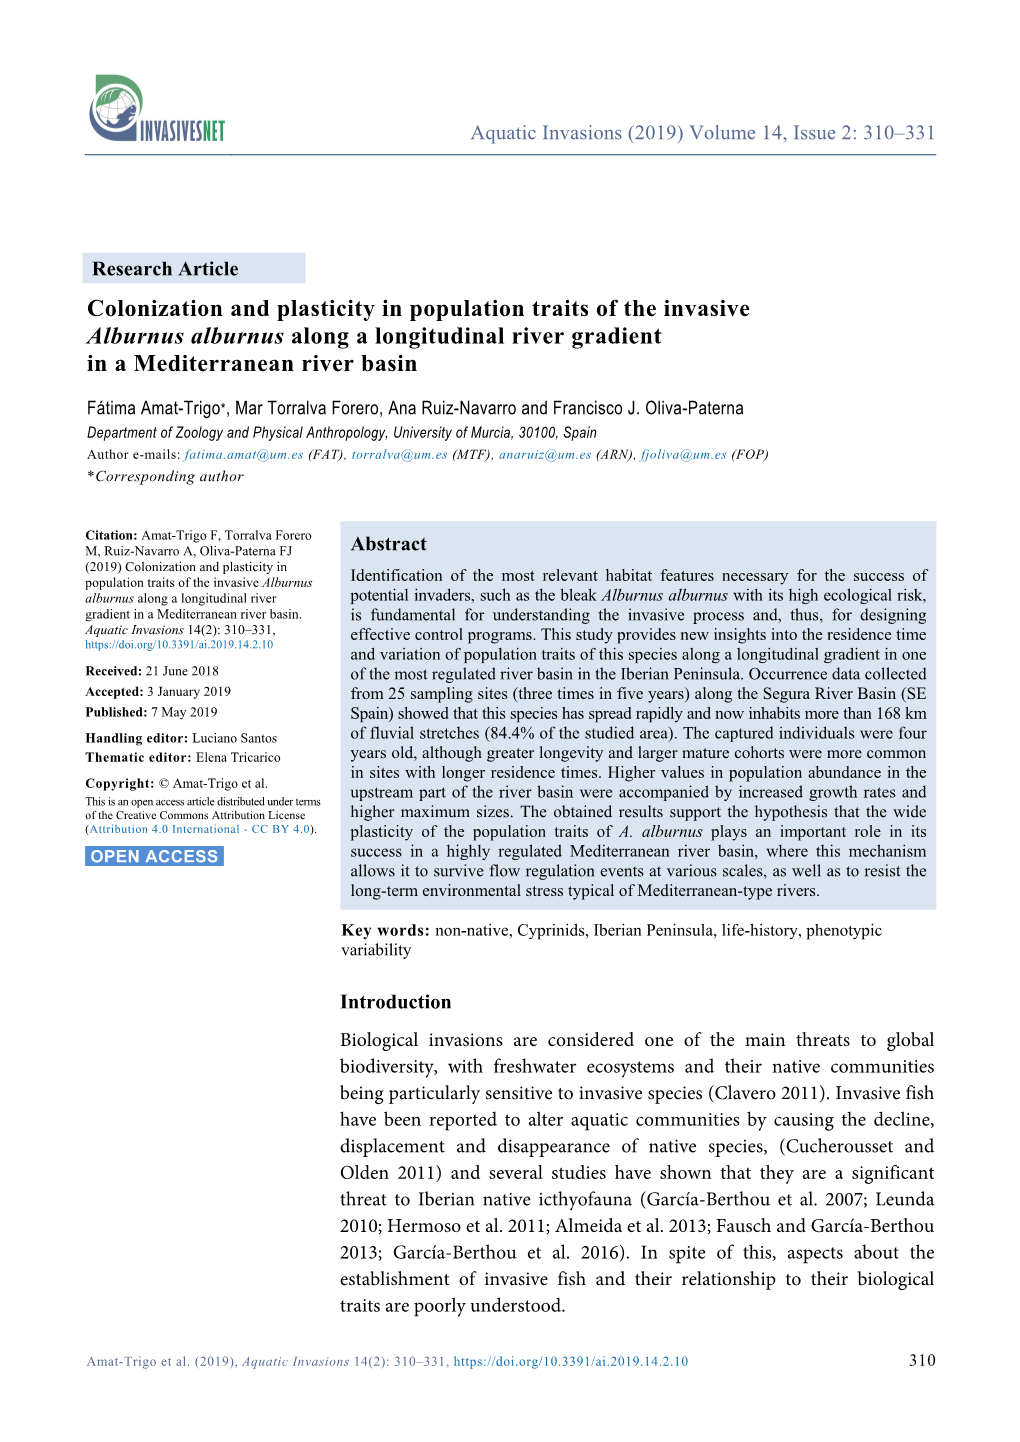 Colonization and Plasticity in Population Traits of the Invasive Alburnus Alburnus Along a Longitudinal River Gradient in a Mediterranean River Basin